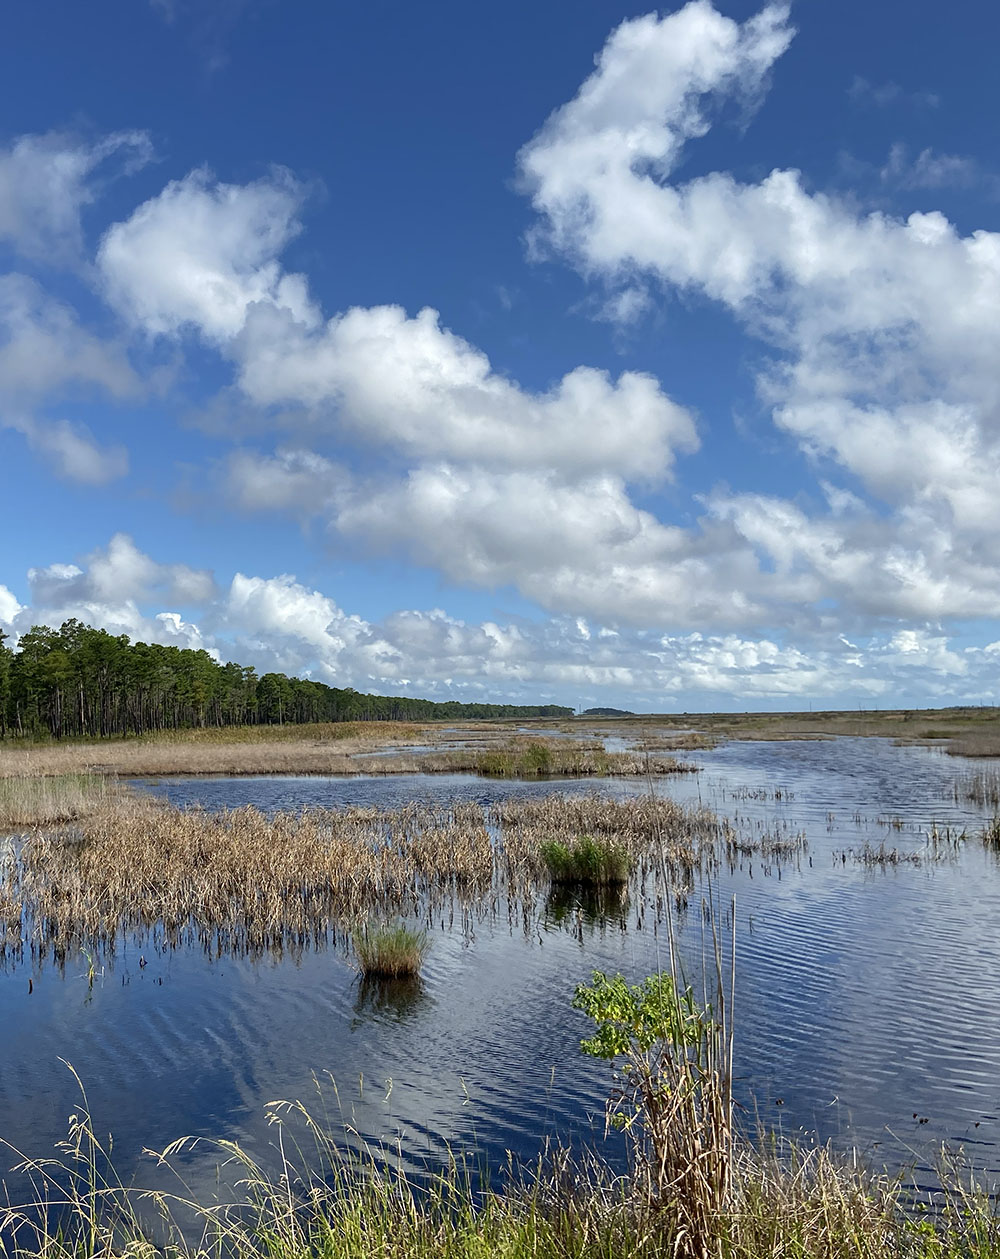 A beautiful day in a South Carolina wetland.